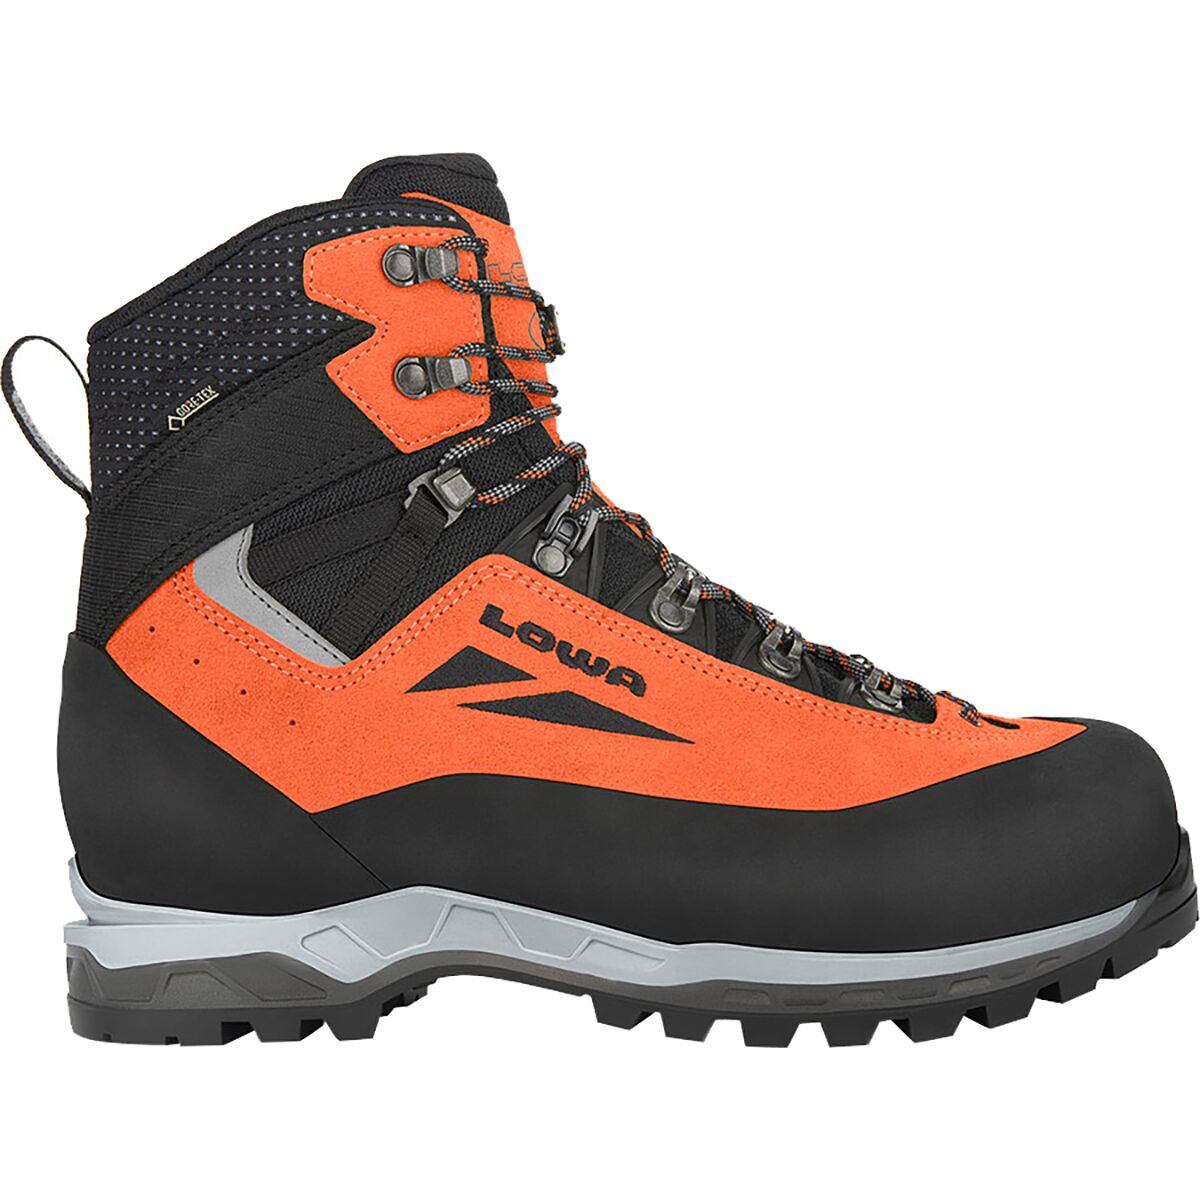 Cevedale Evo GTX Mountaineering Boot - Men